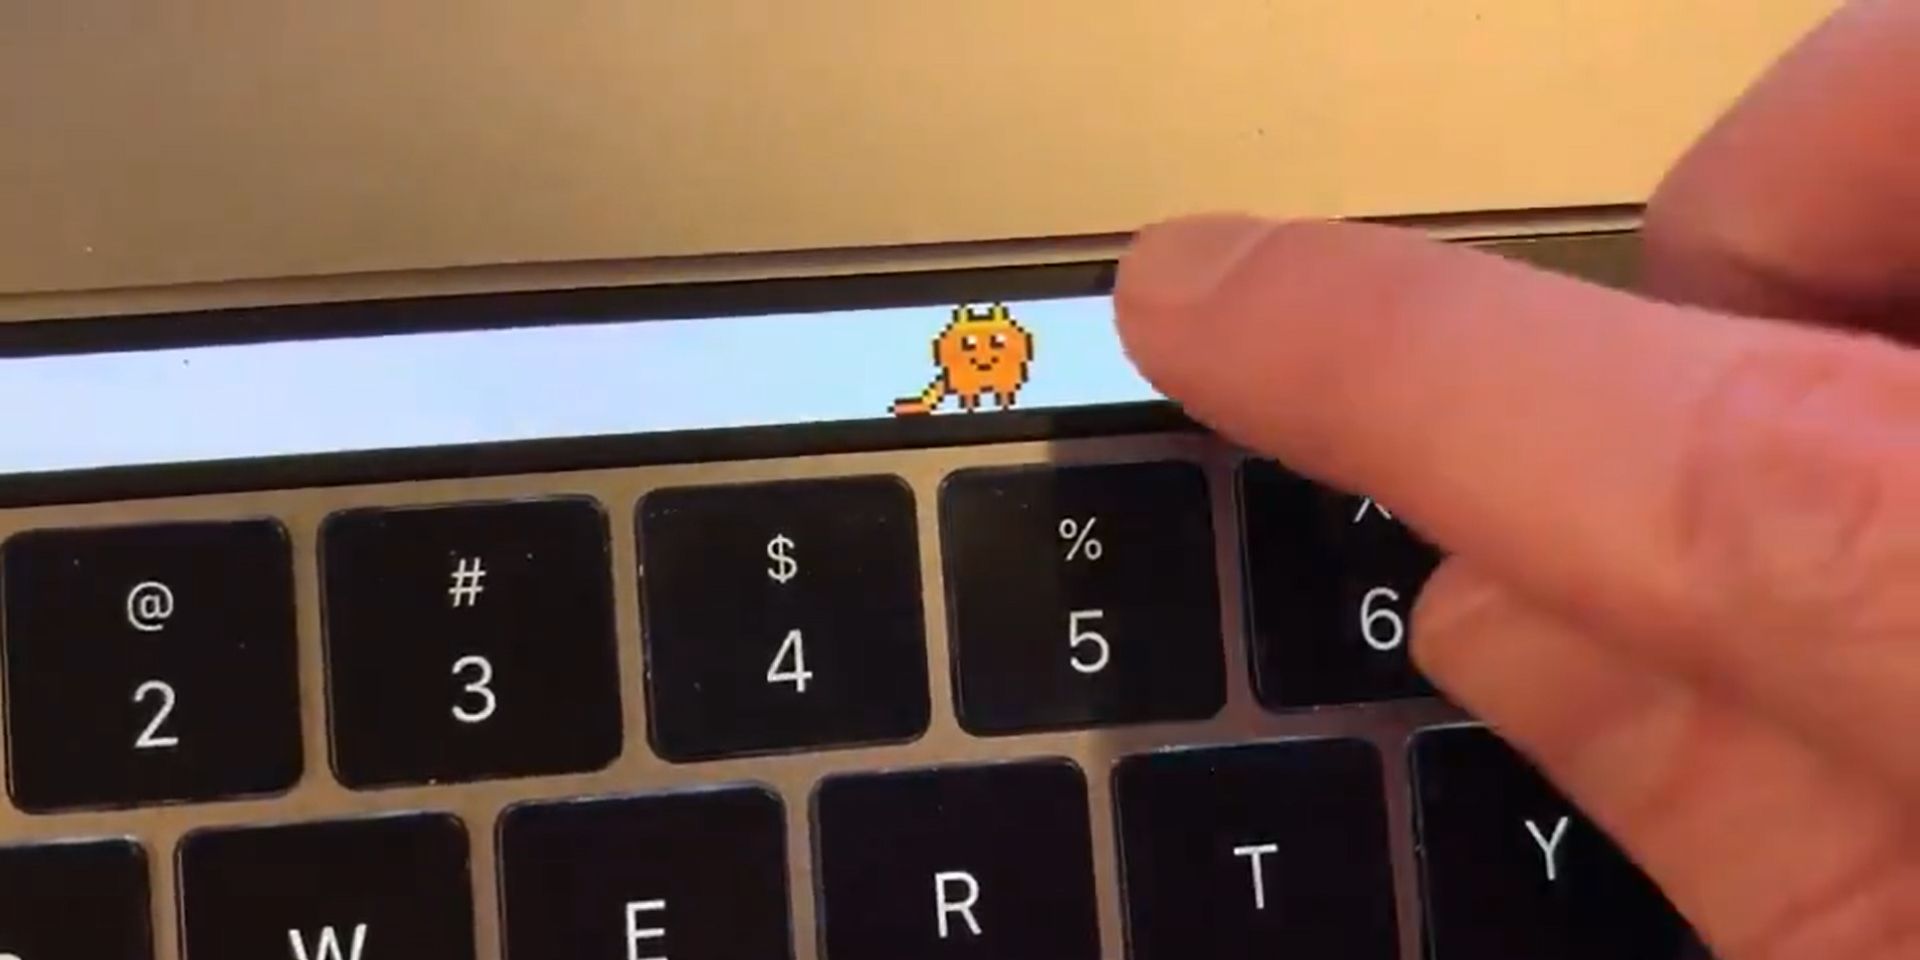 How to get emojis on mac touch bar - adviserlasopa